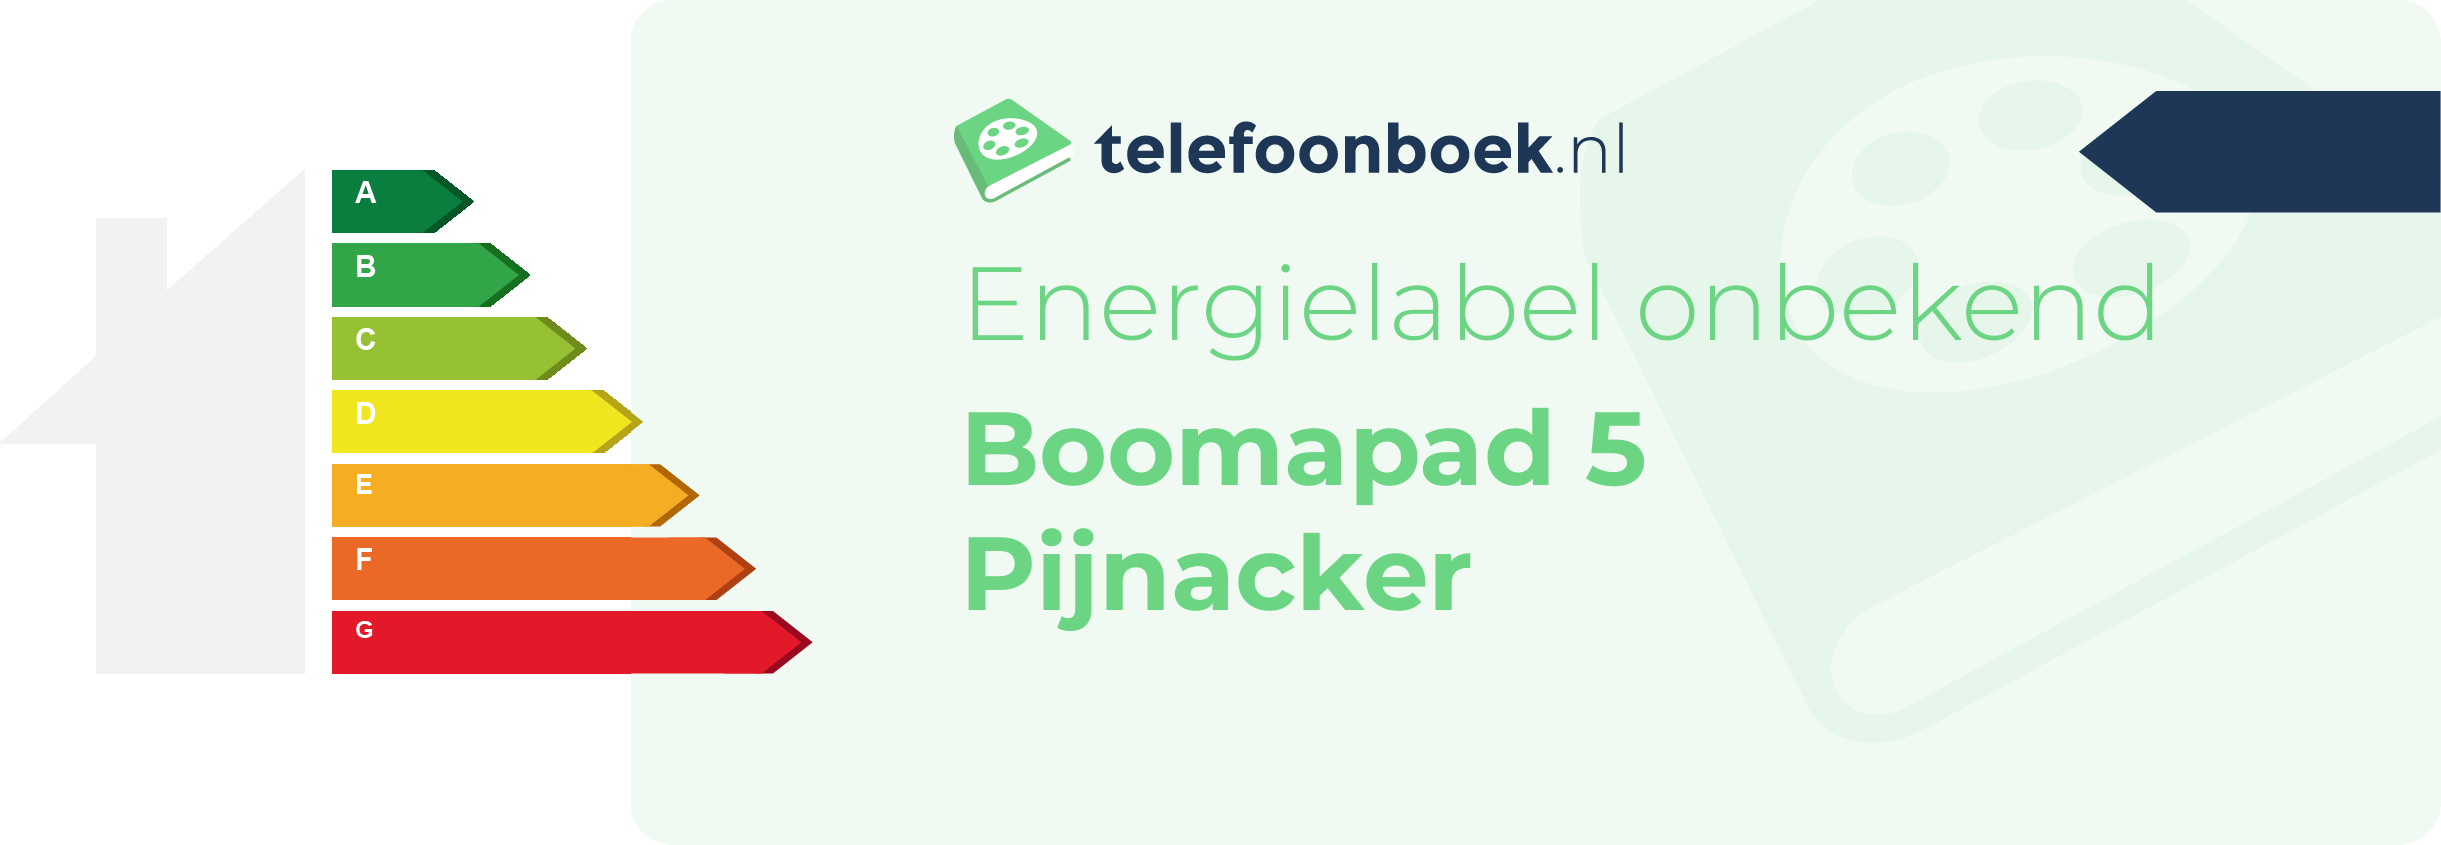 Energielabel Boomapad 5 Pijnacker